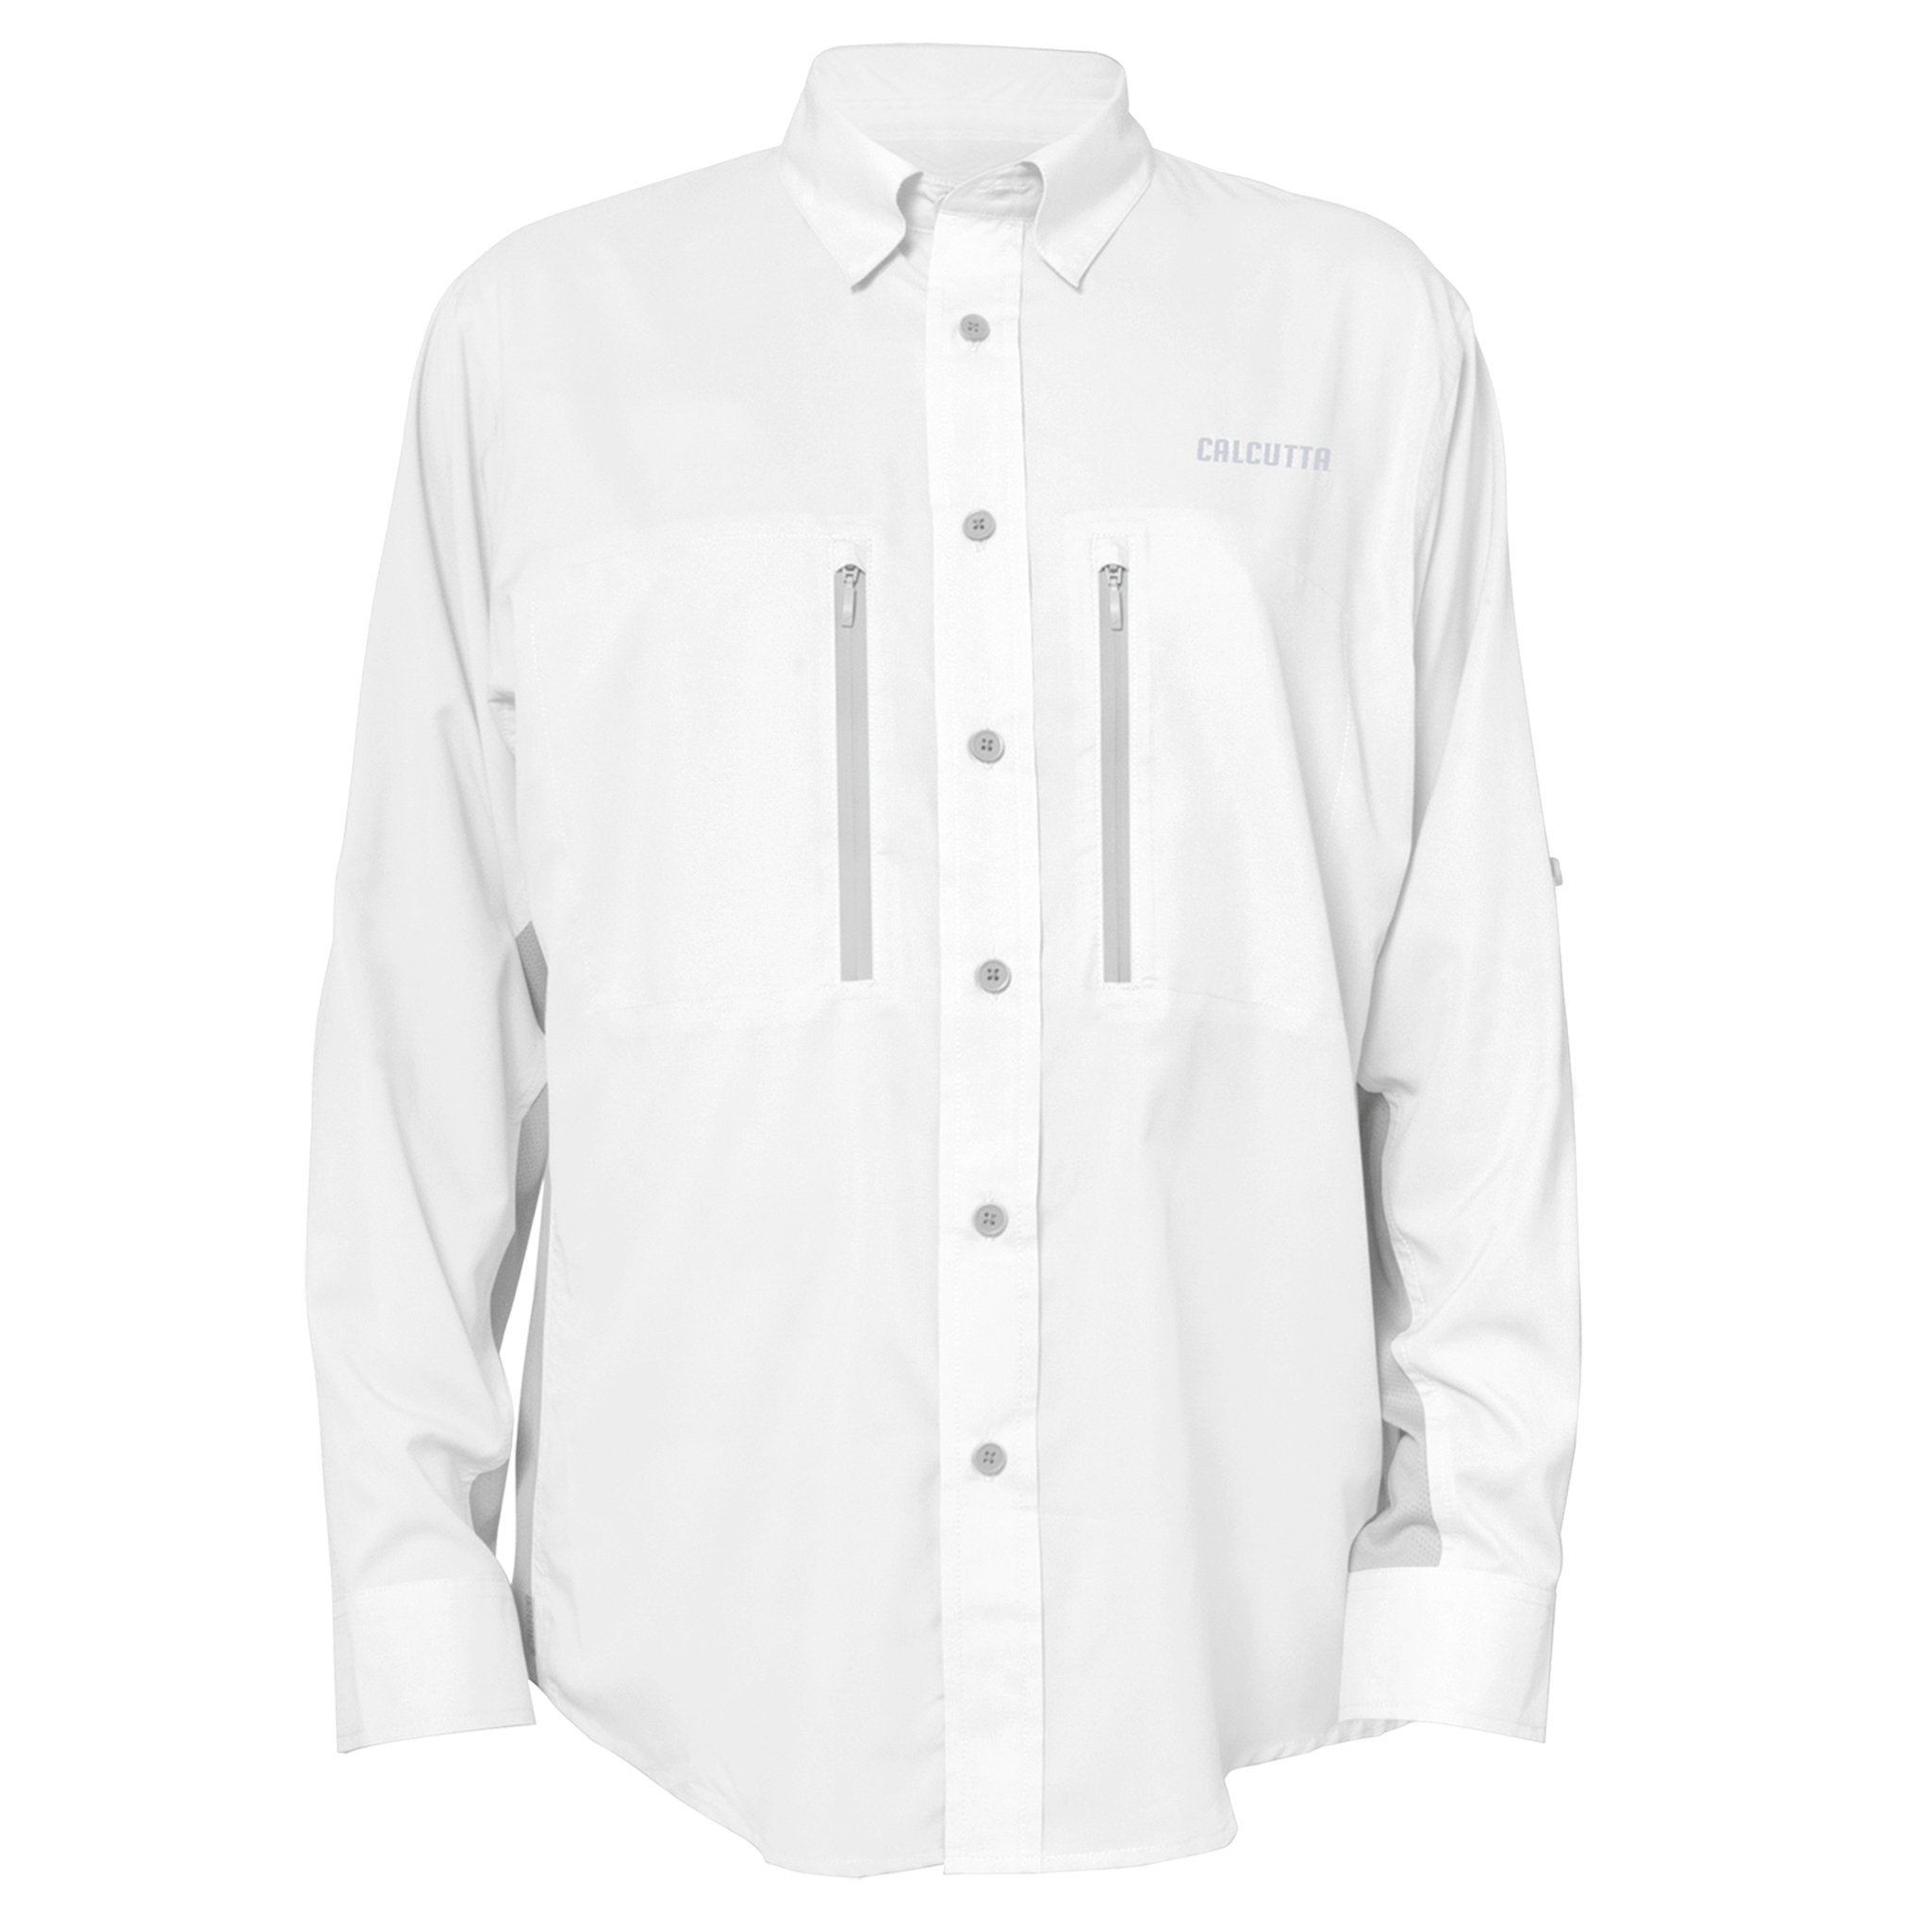 Calcutta Outdoors Long Sleeve Performance Fishing Shirt (White - XL)